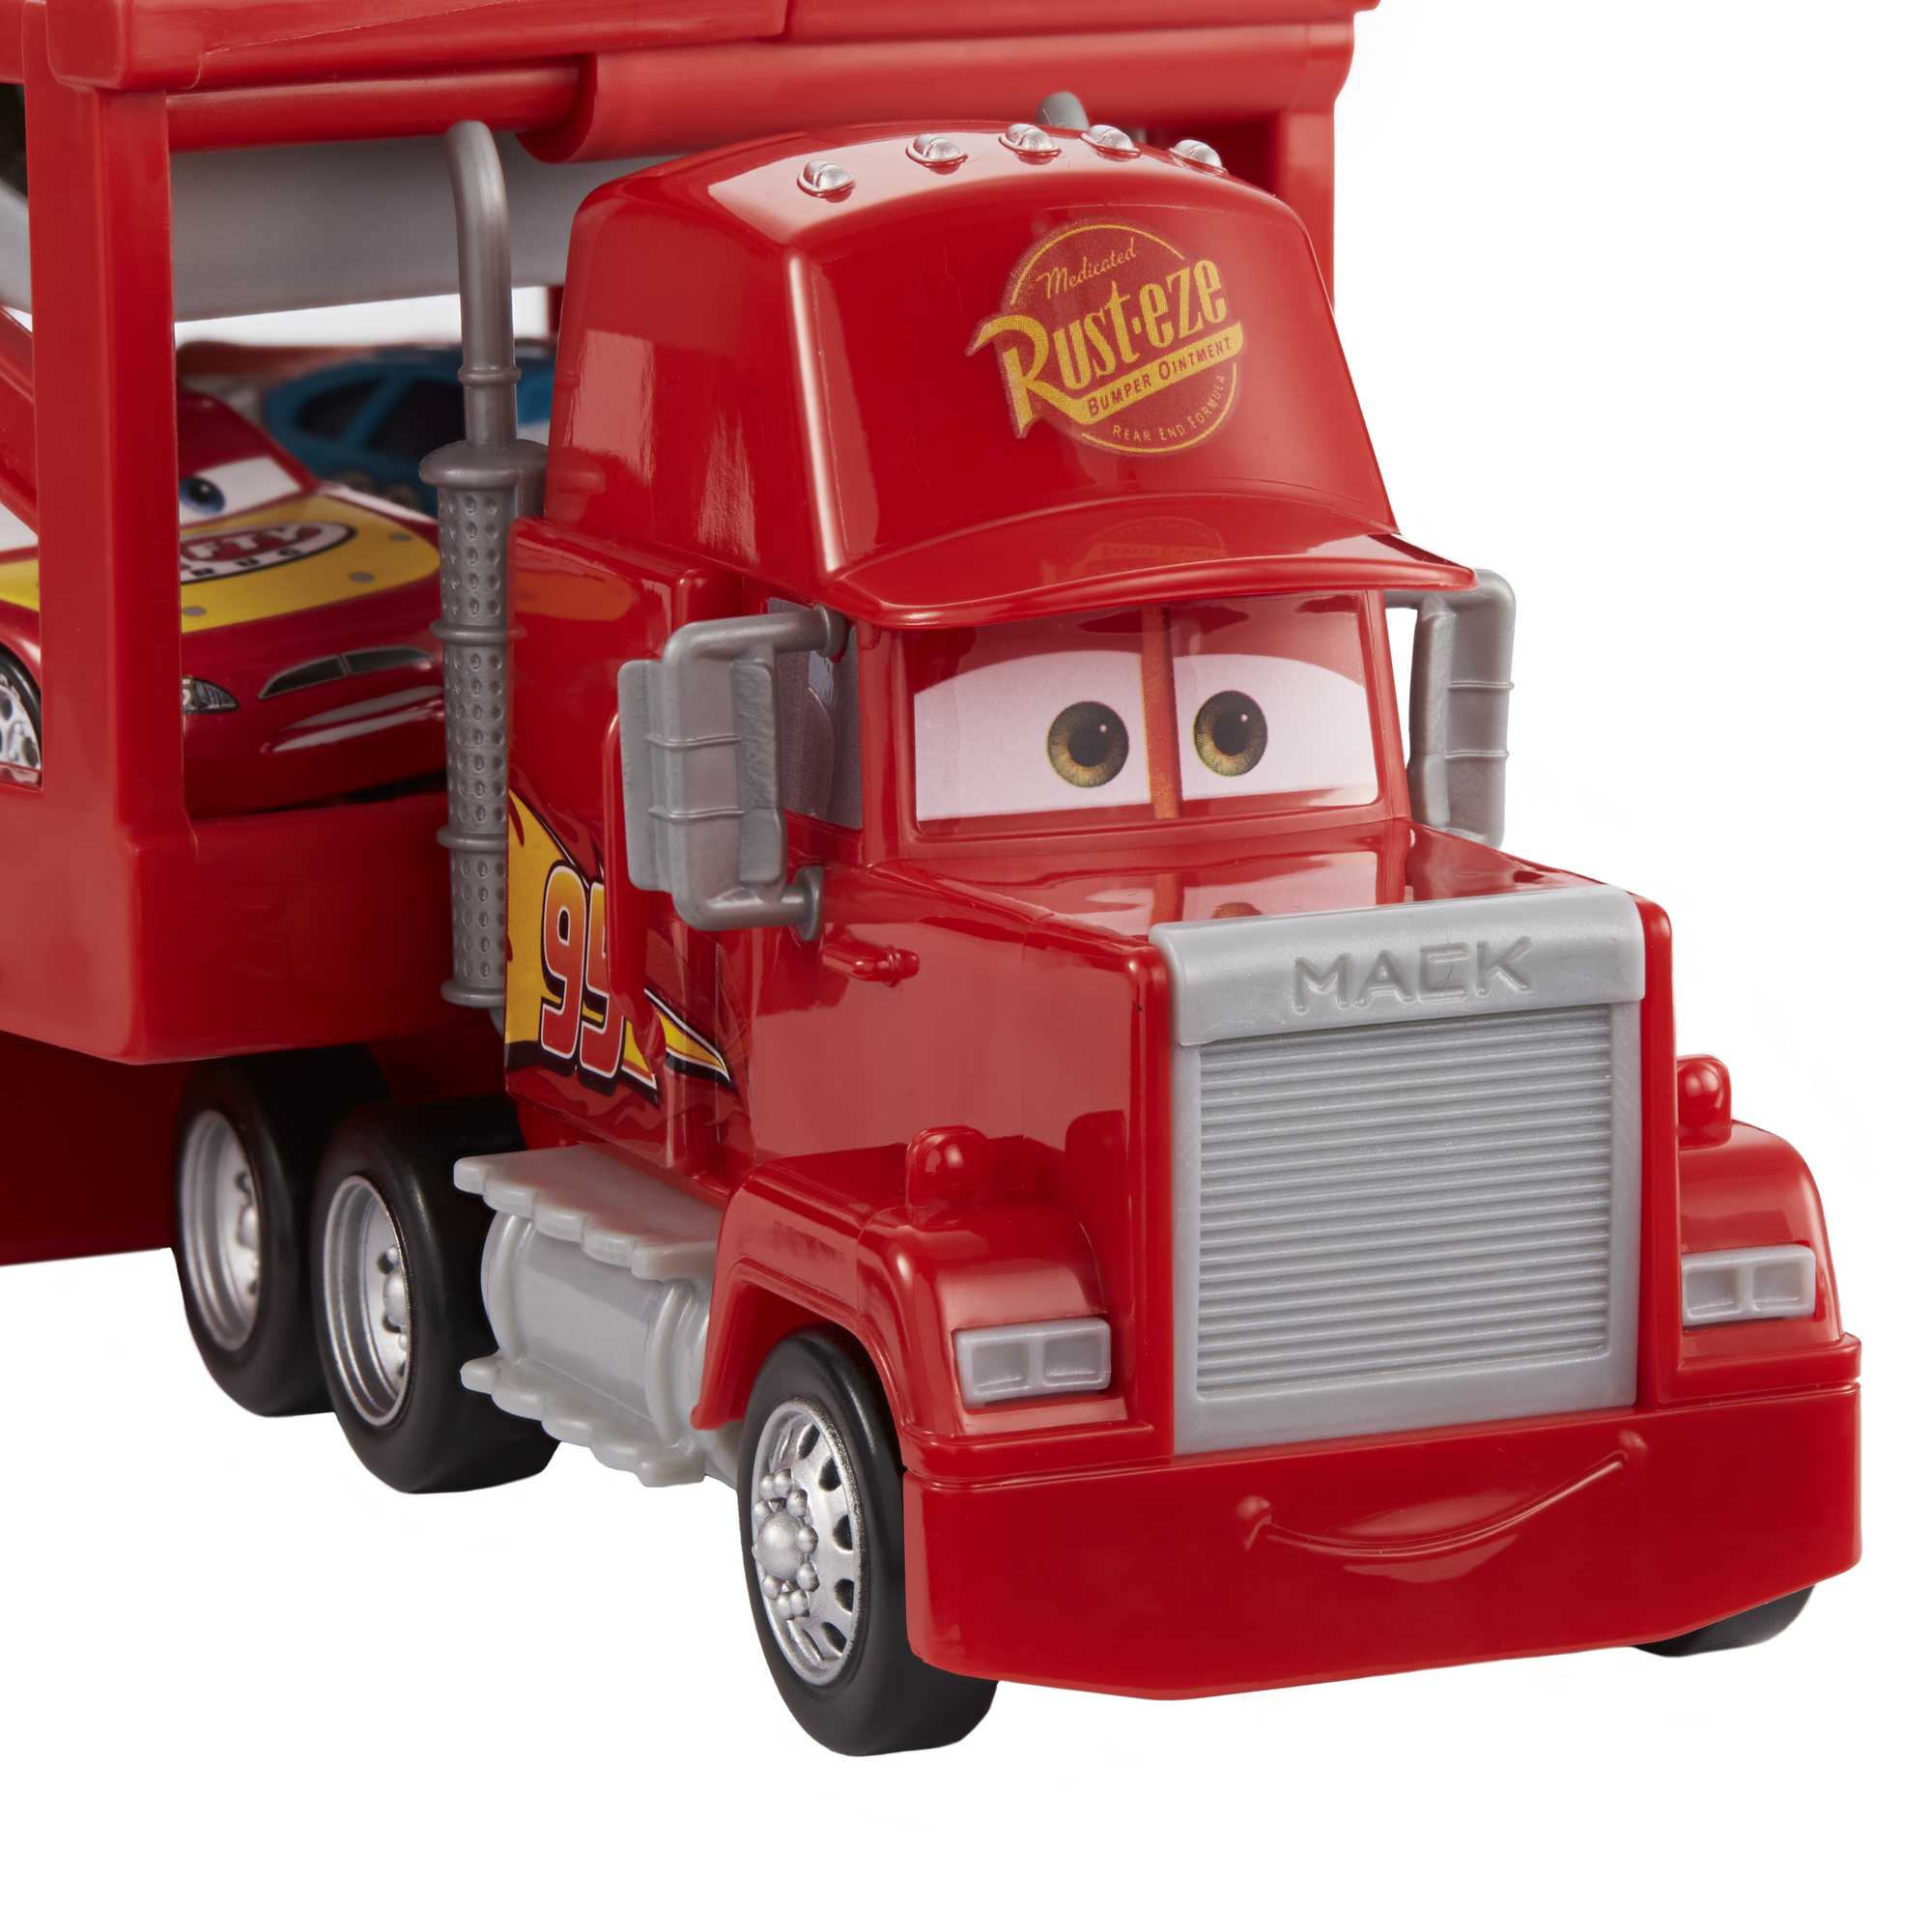 Disney And Pixar Cars Mack Hauler Truck With Ramp, 13-Inch 12-Car Carrier